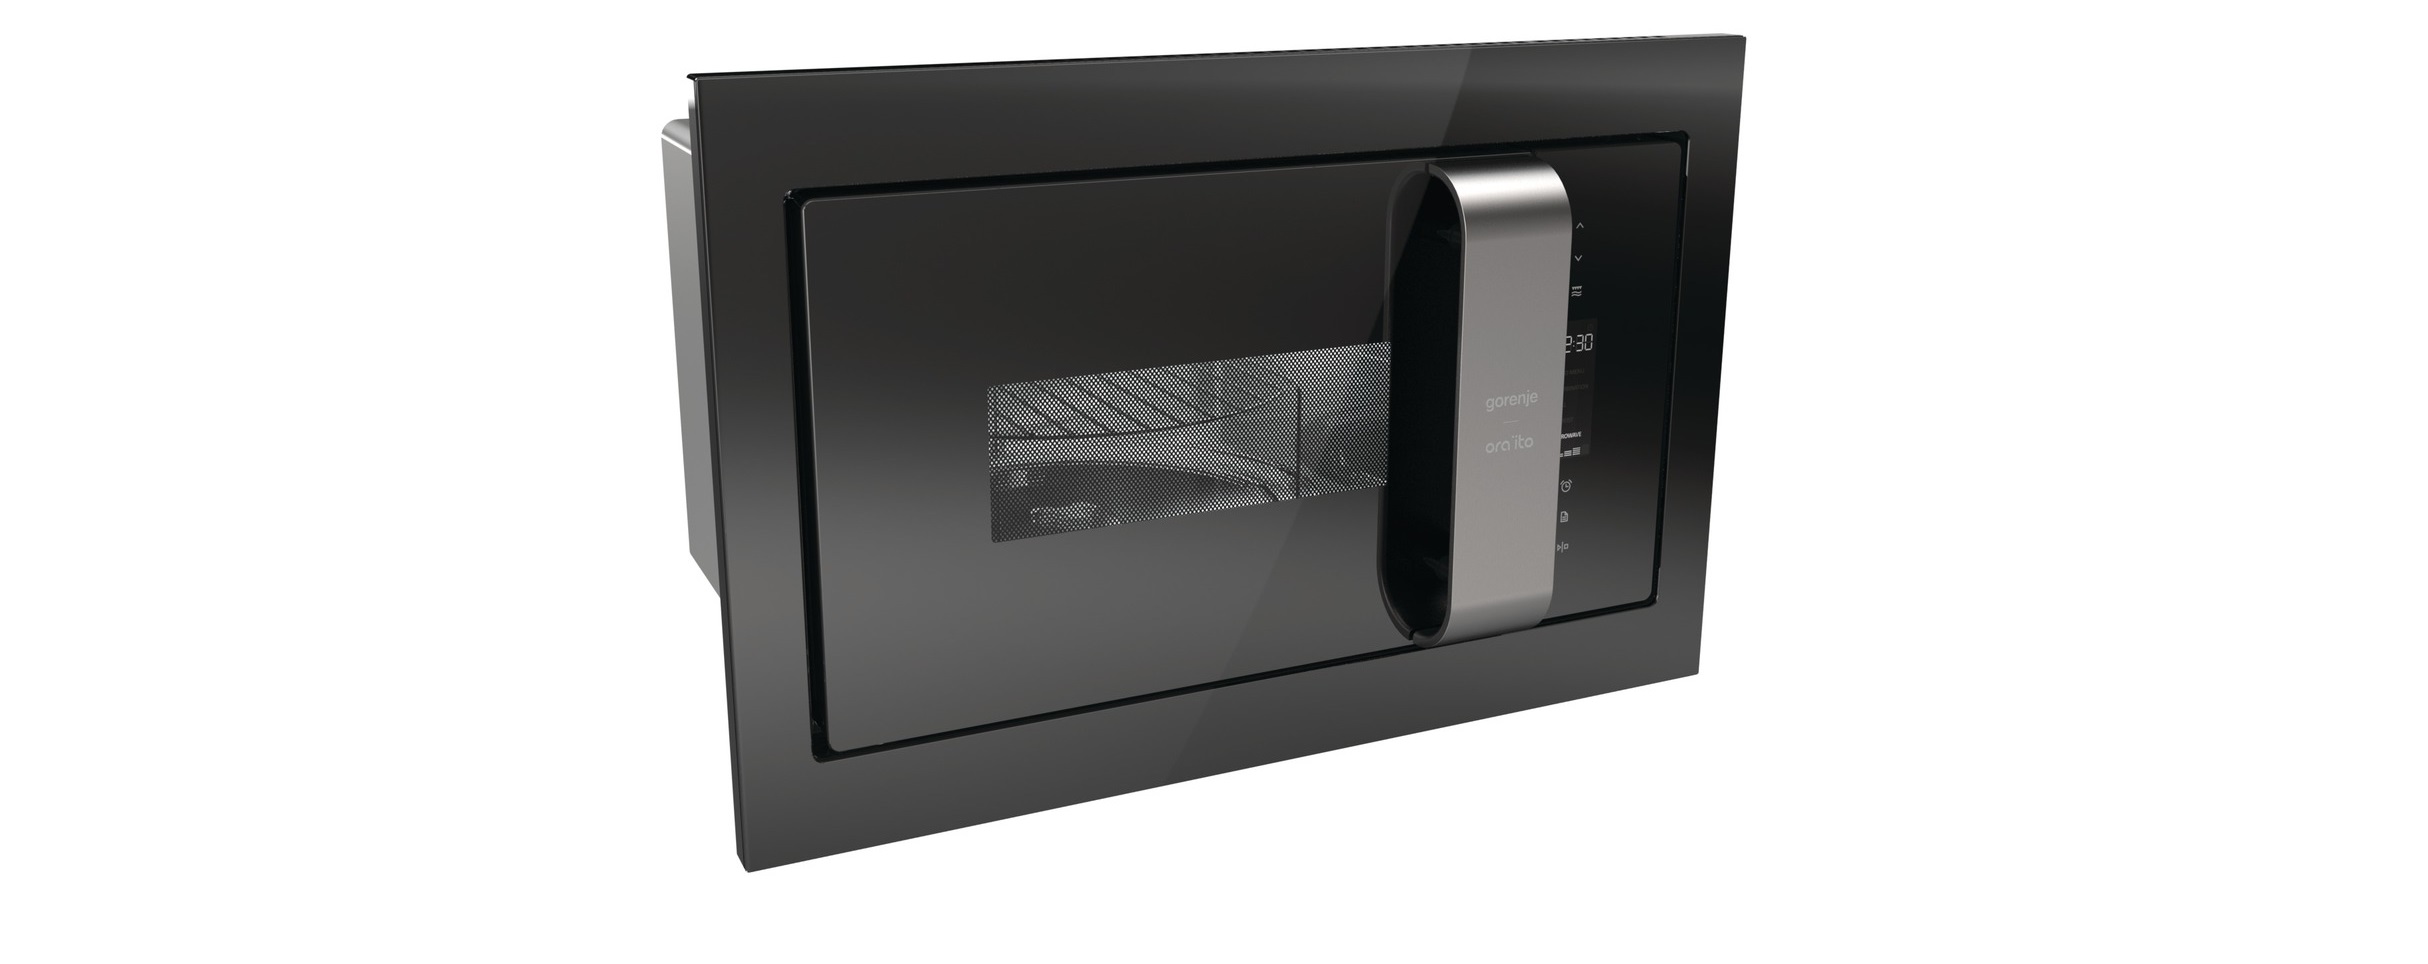 Black - Microwave Grill, BM235ORAB cm, Built-In Digital Electric With Liters, Gorenje 60 23